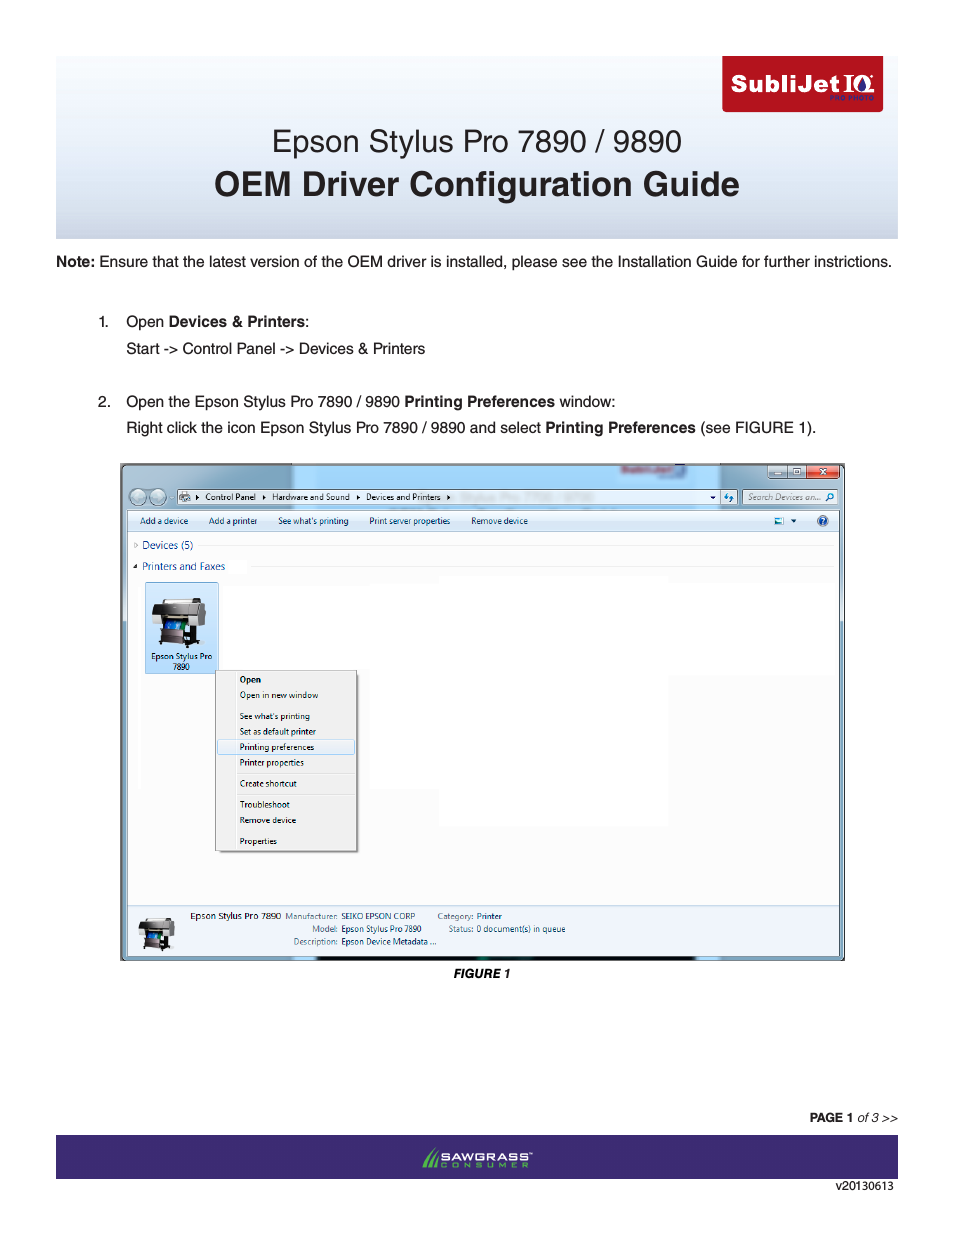 SubliJet IQ Epson Stylus Pro 9890 - IQ Pro Photo (Windows ICC Profile Setup): Driver Configuration Guide